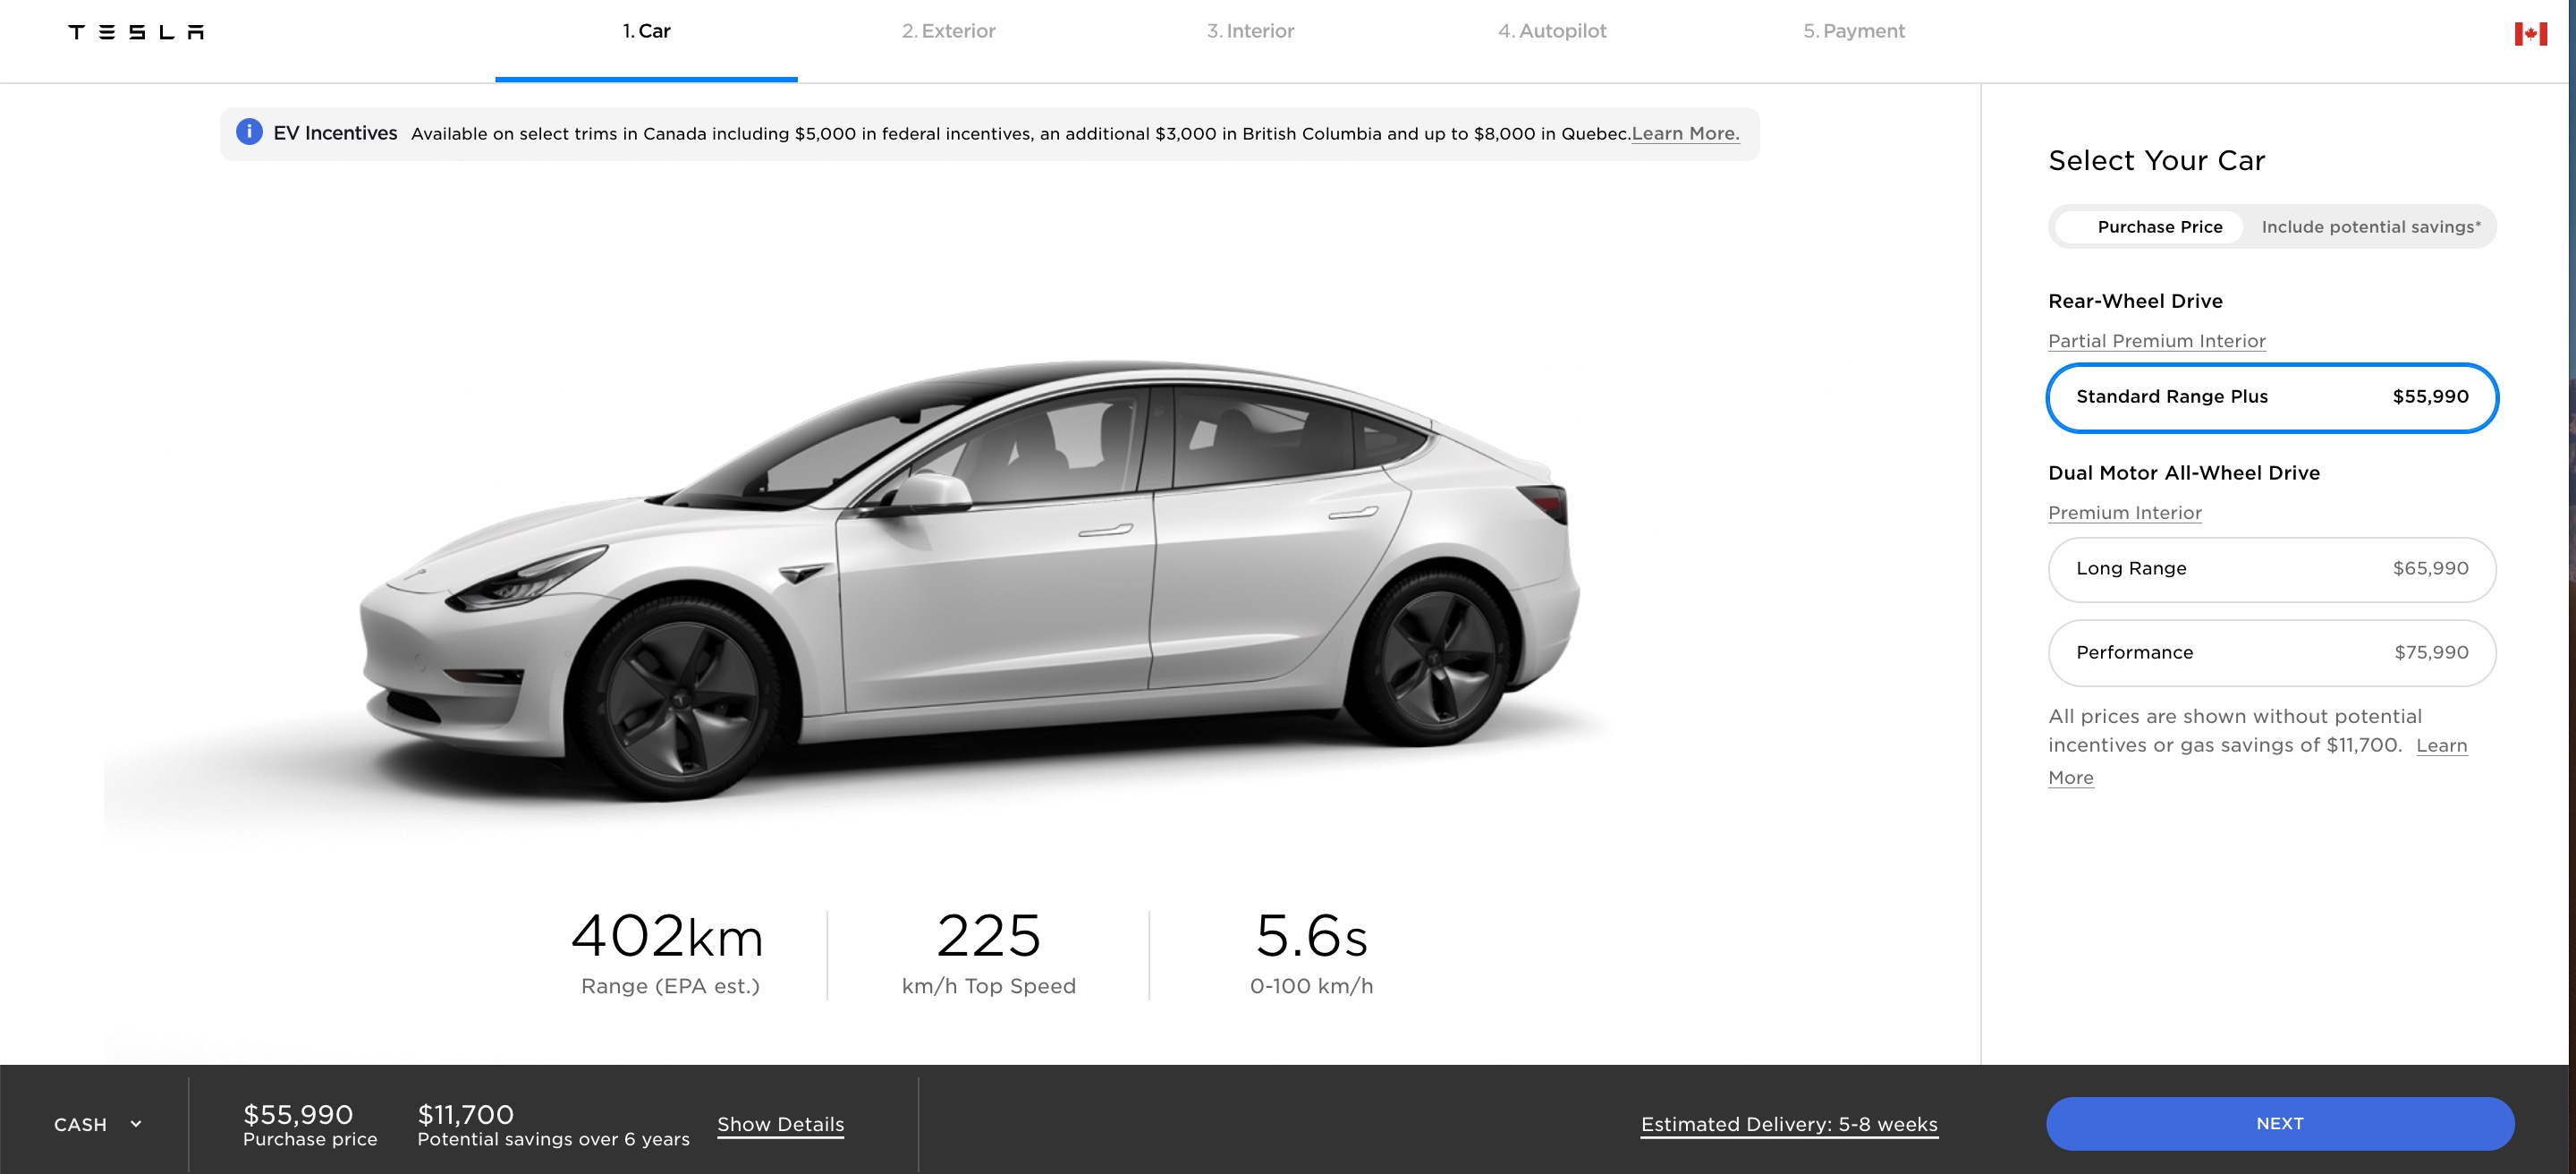 Tesla Model 3 'price bump' in Canada is still safe for 5000 rebate